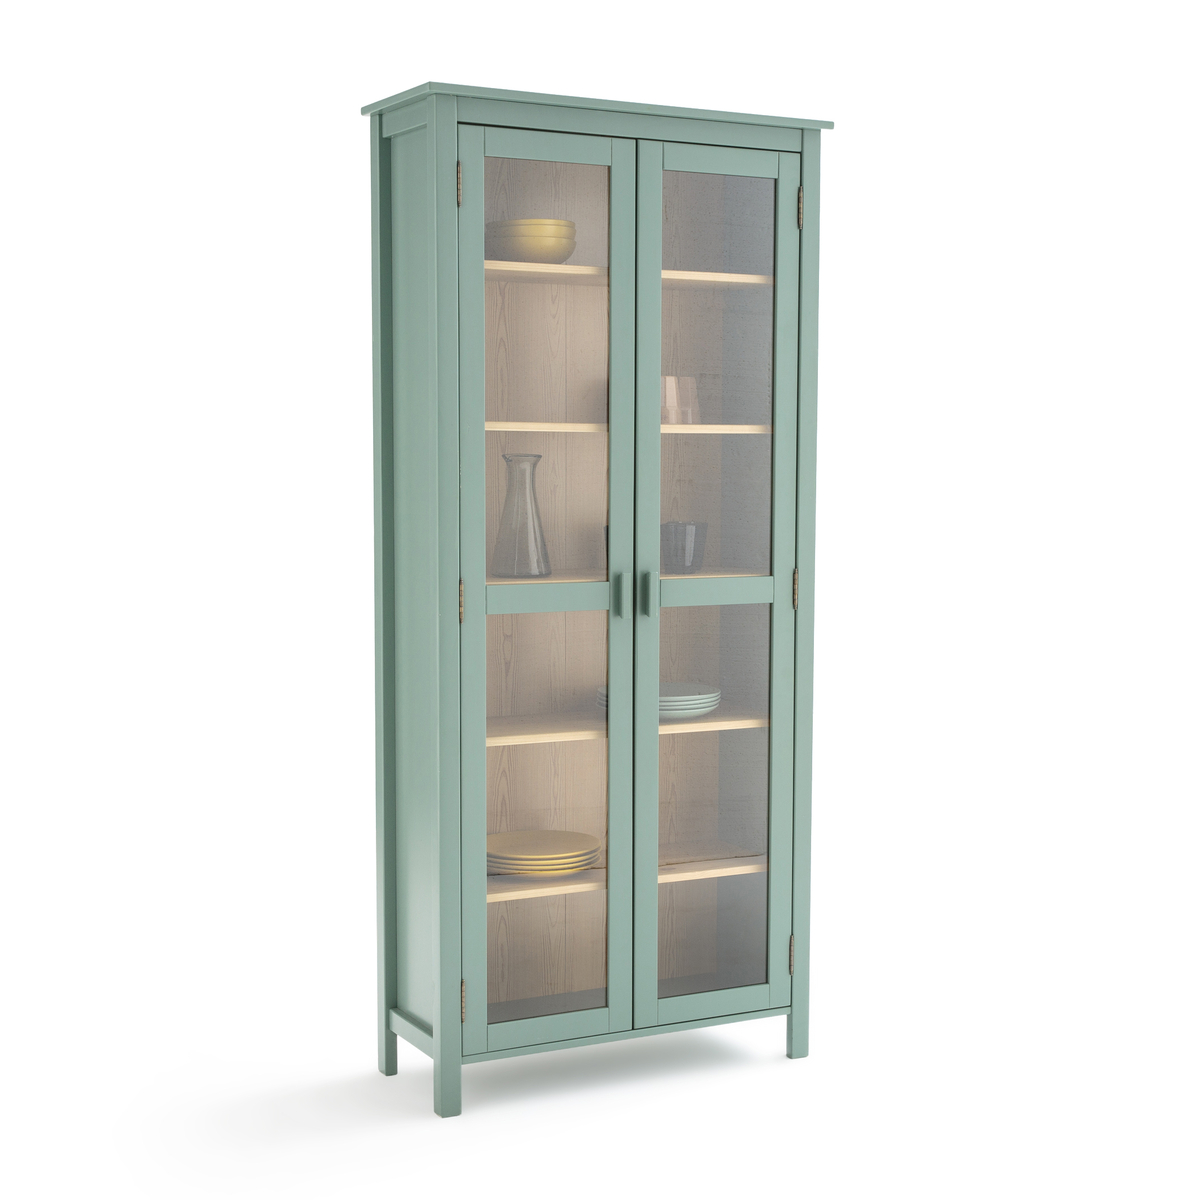 Alvina Solid Pine Dresser Cabinet by La Redoute